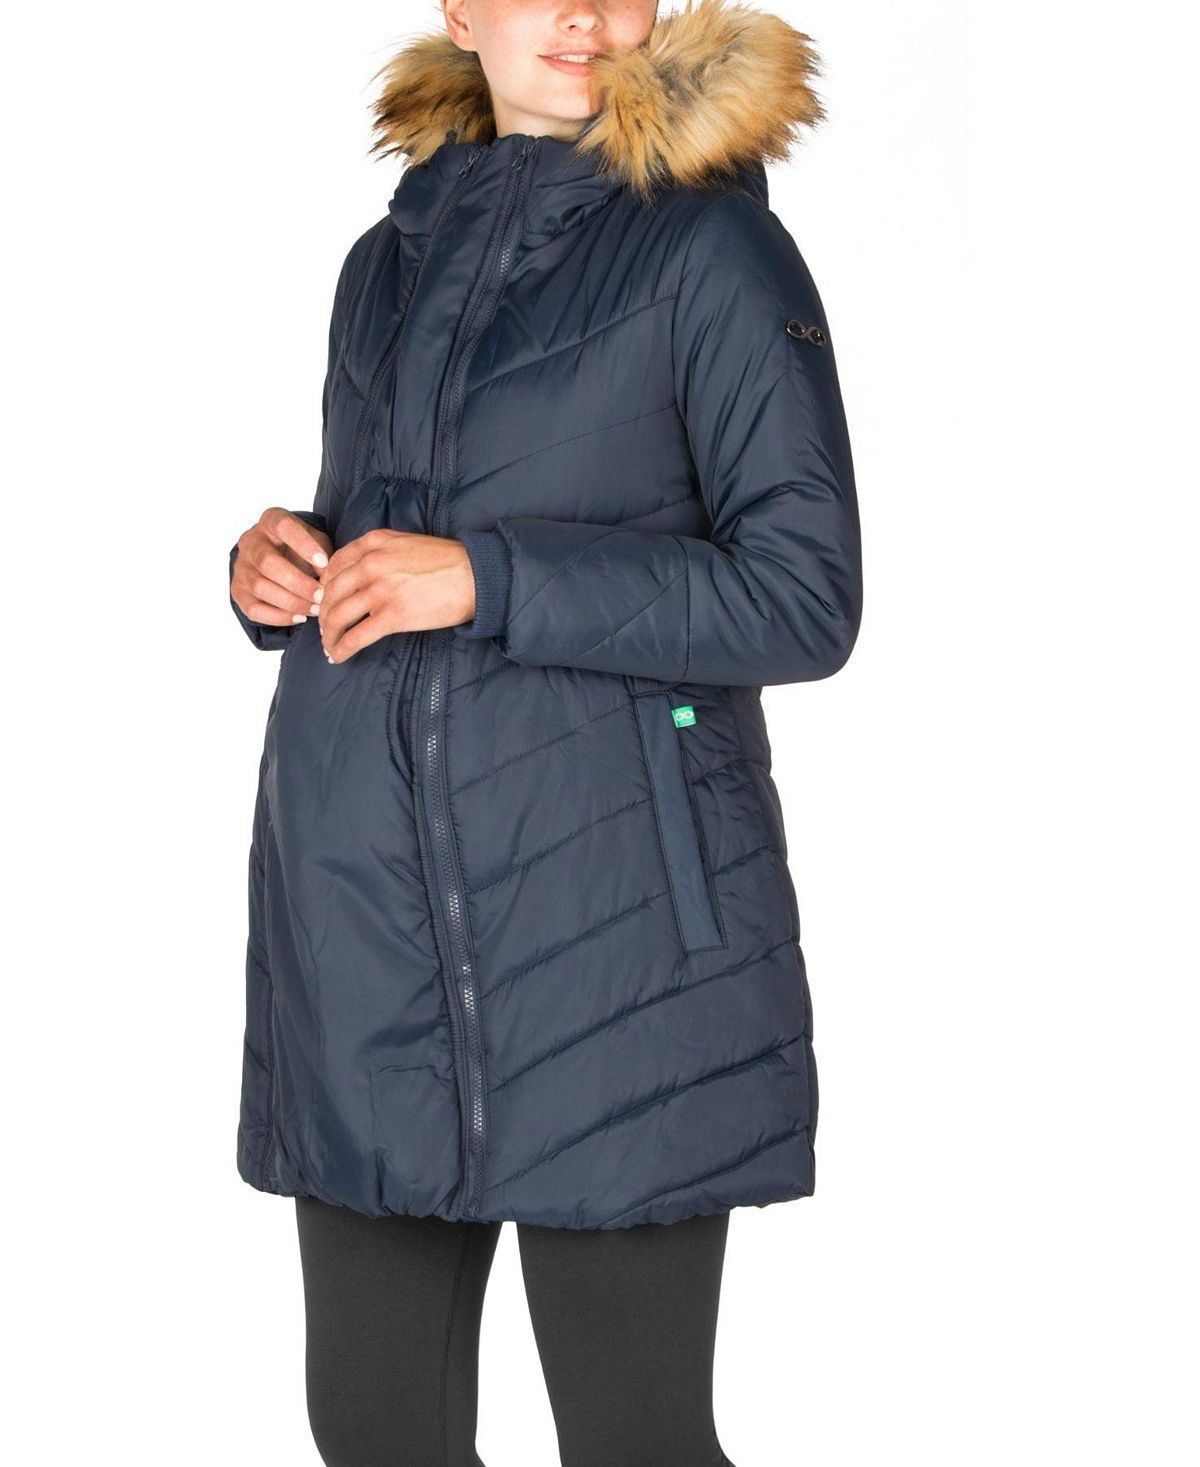 Lexi - Пальто для беременных 3в1 со съемным капюшоном Modern Eternity Maternity, темно-синий цена и фото